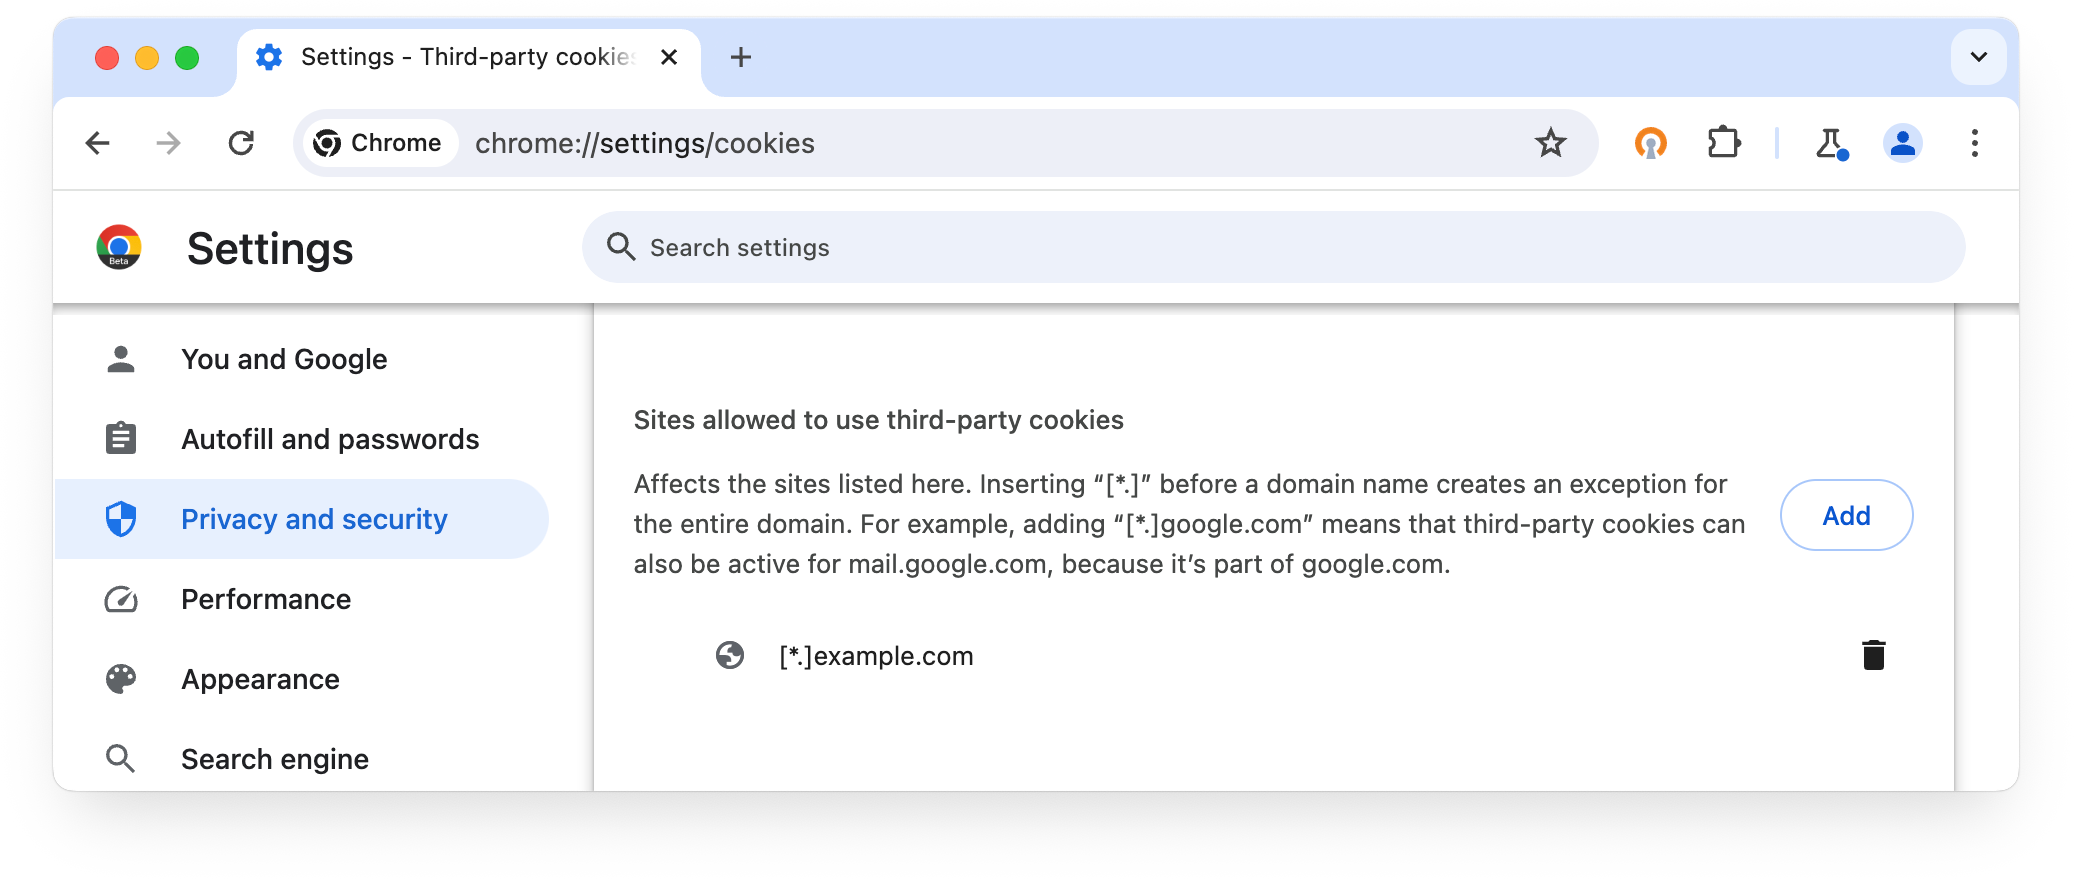 chrome://settings/cookies: السماح للمواقع الإلكترونية باستخدام ملفات تعريف الارتباط التابعة لجهات خارجية